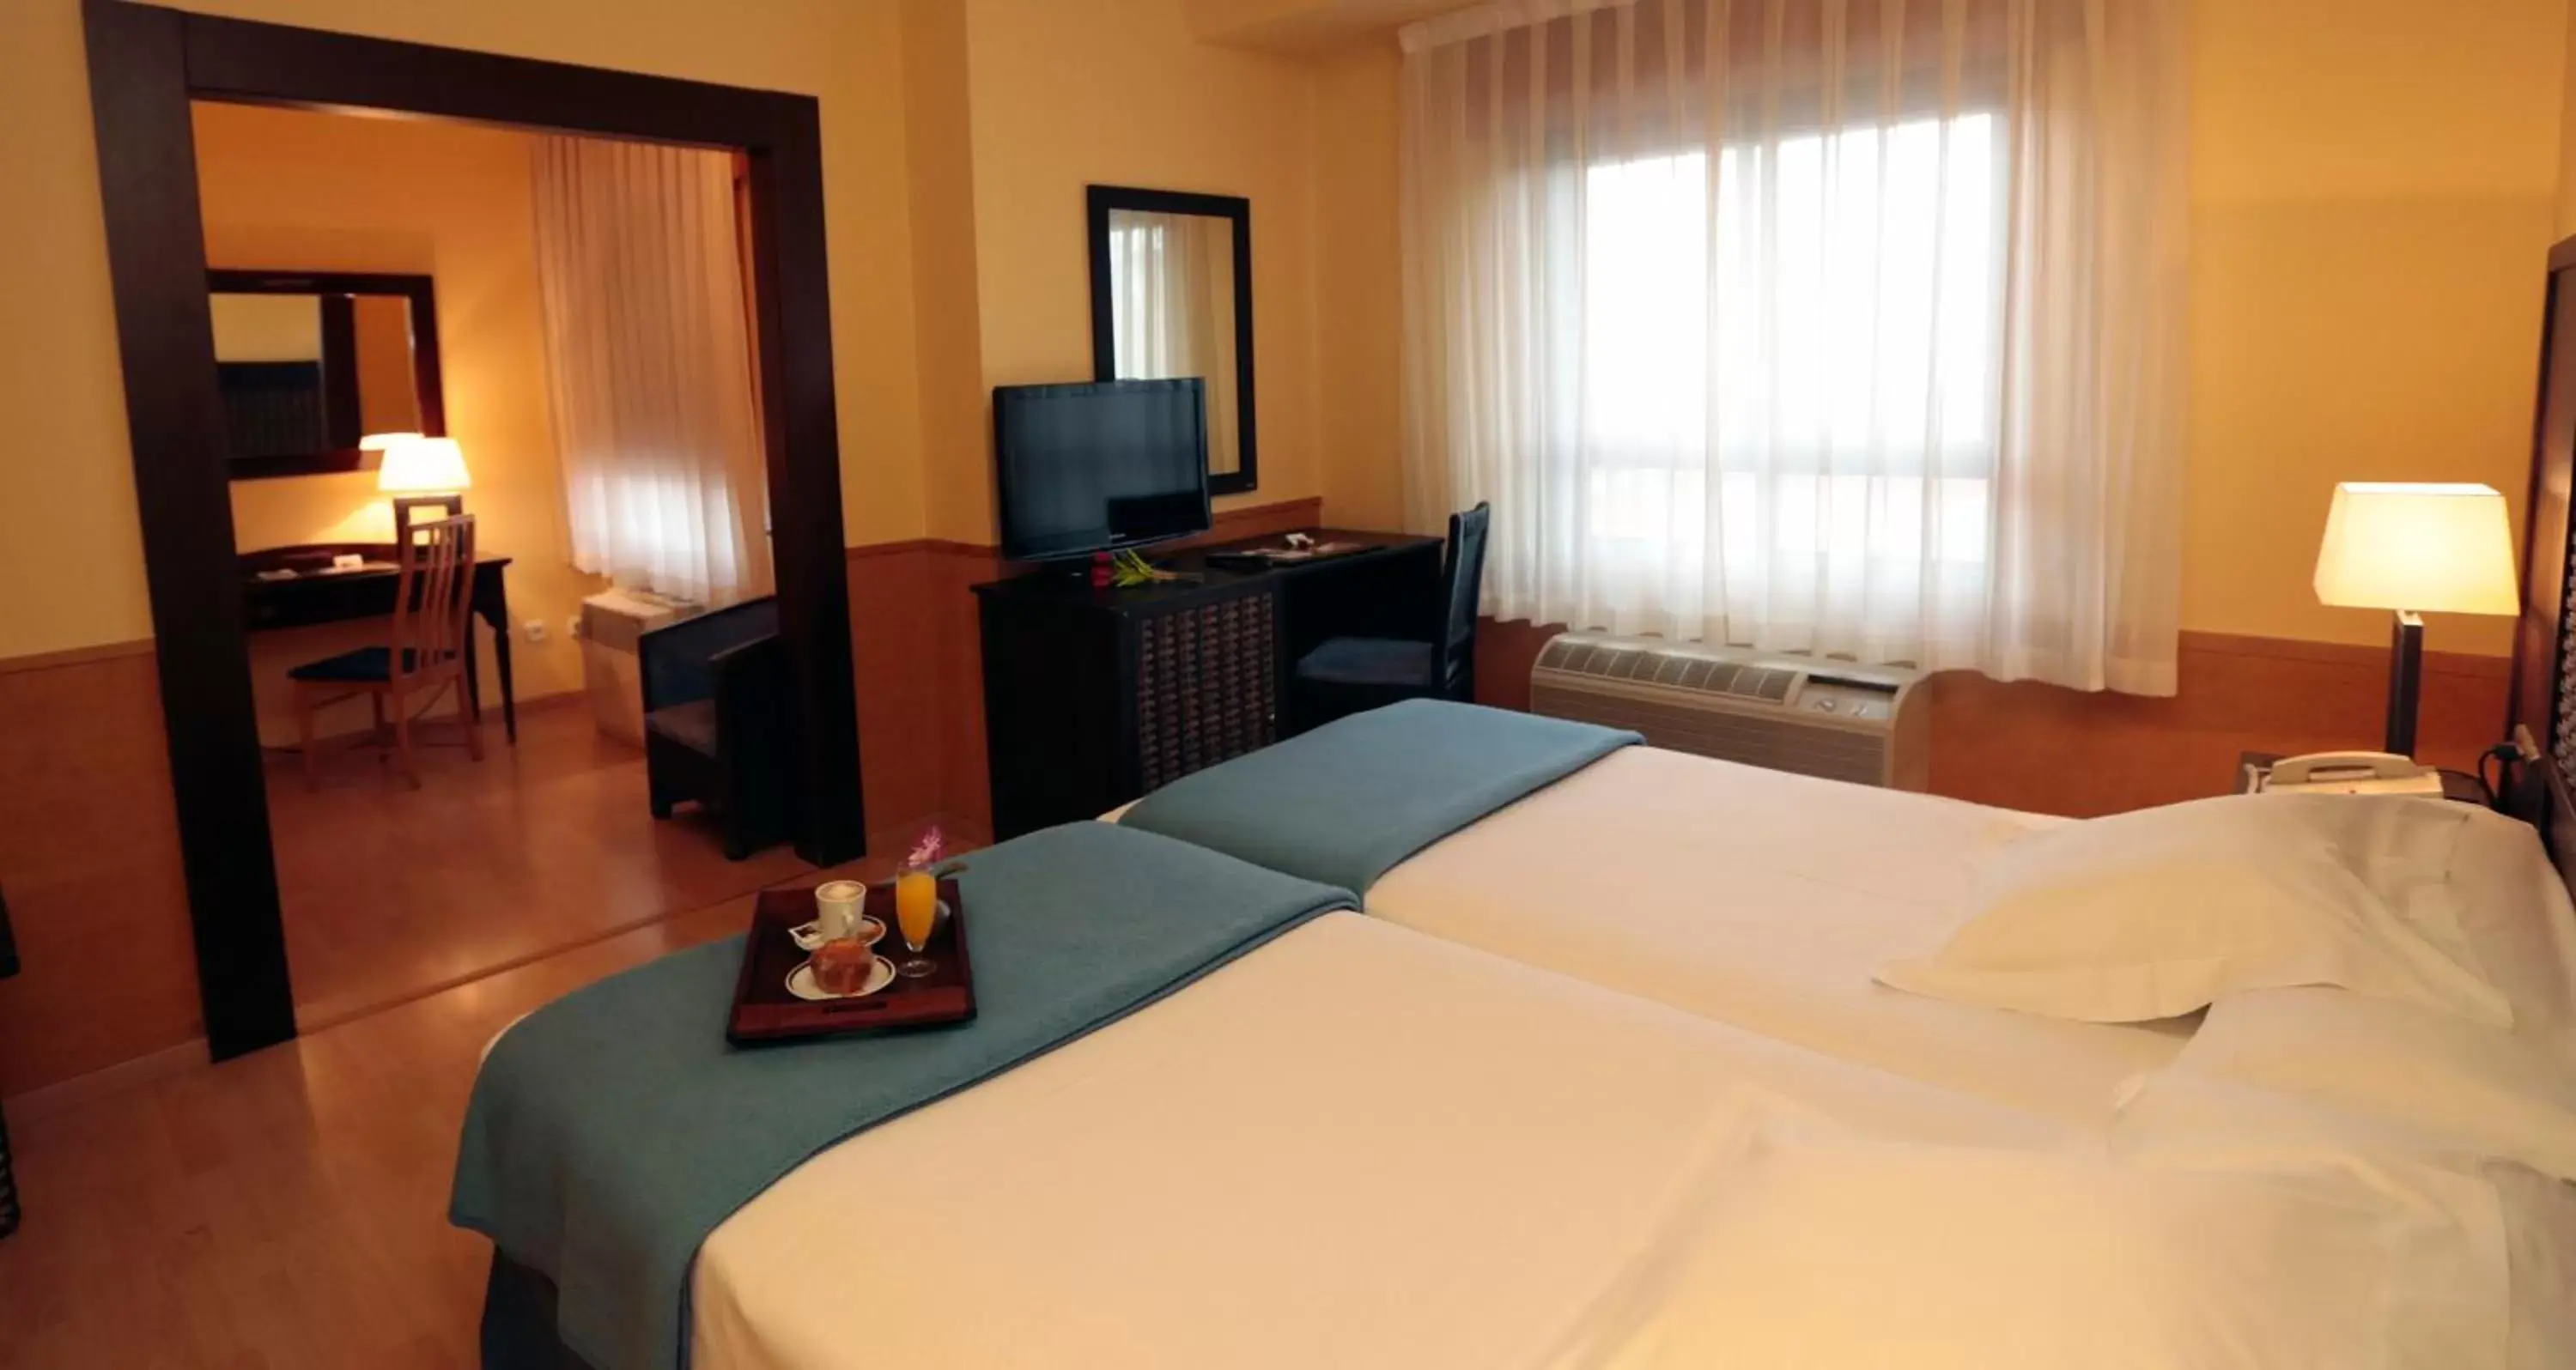 Bedroom, TV/Entertainment Center in Hotel Spa Congreso